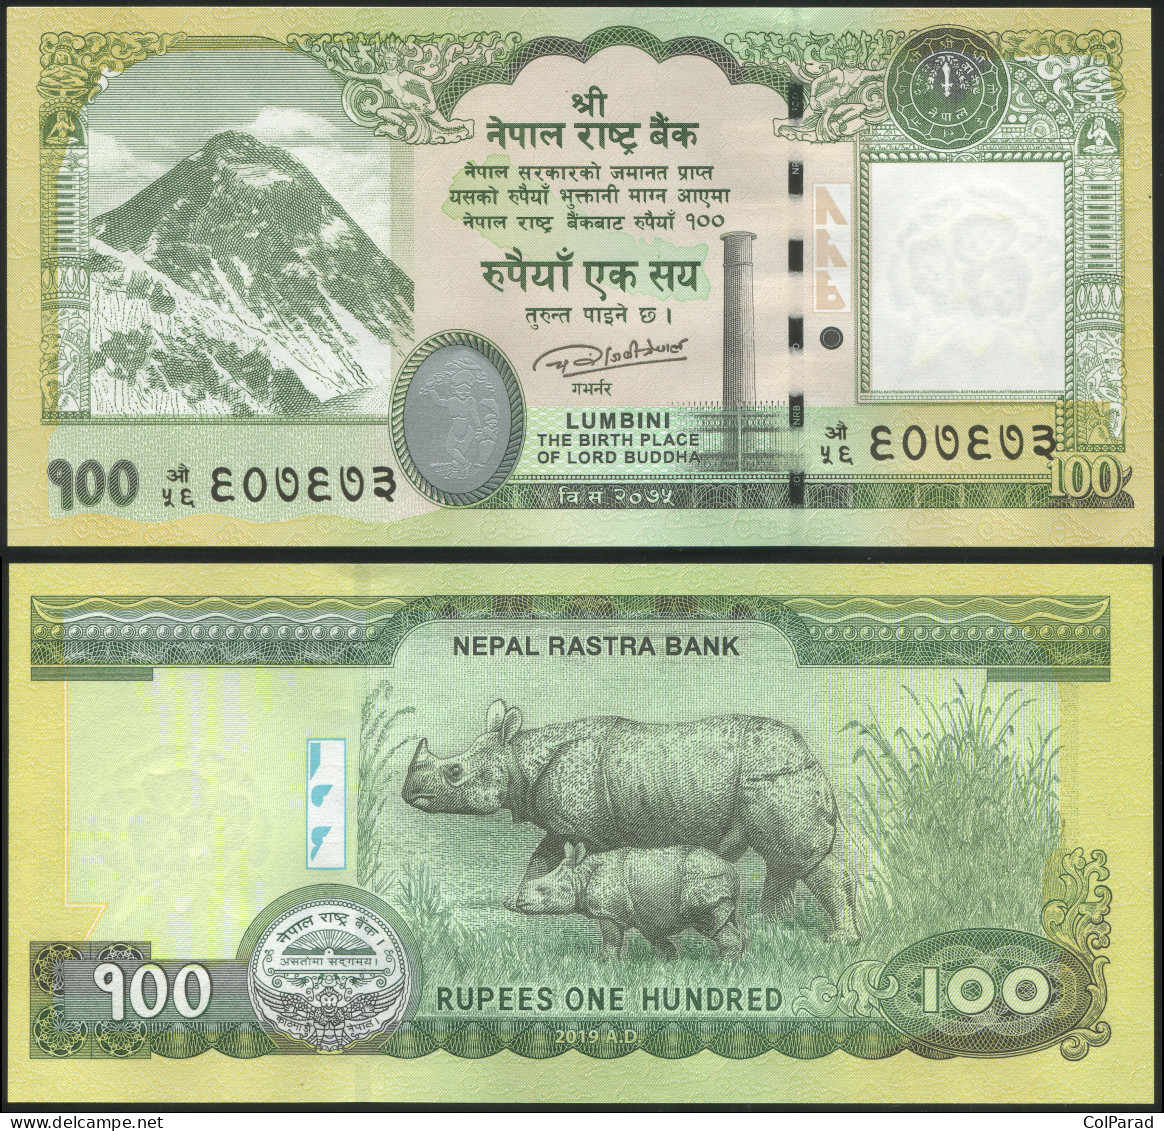 NEPAL 100 RUPEES - 2019 - Paper Unc - P.80b Banknote - Nepal